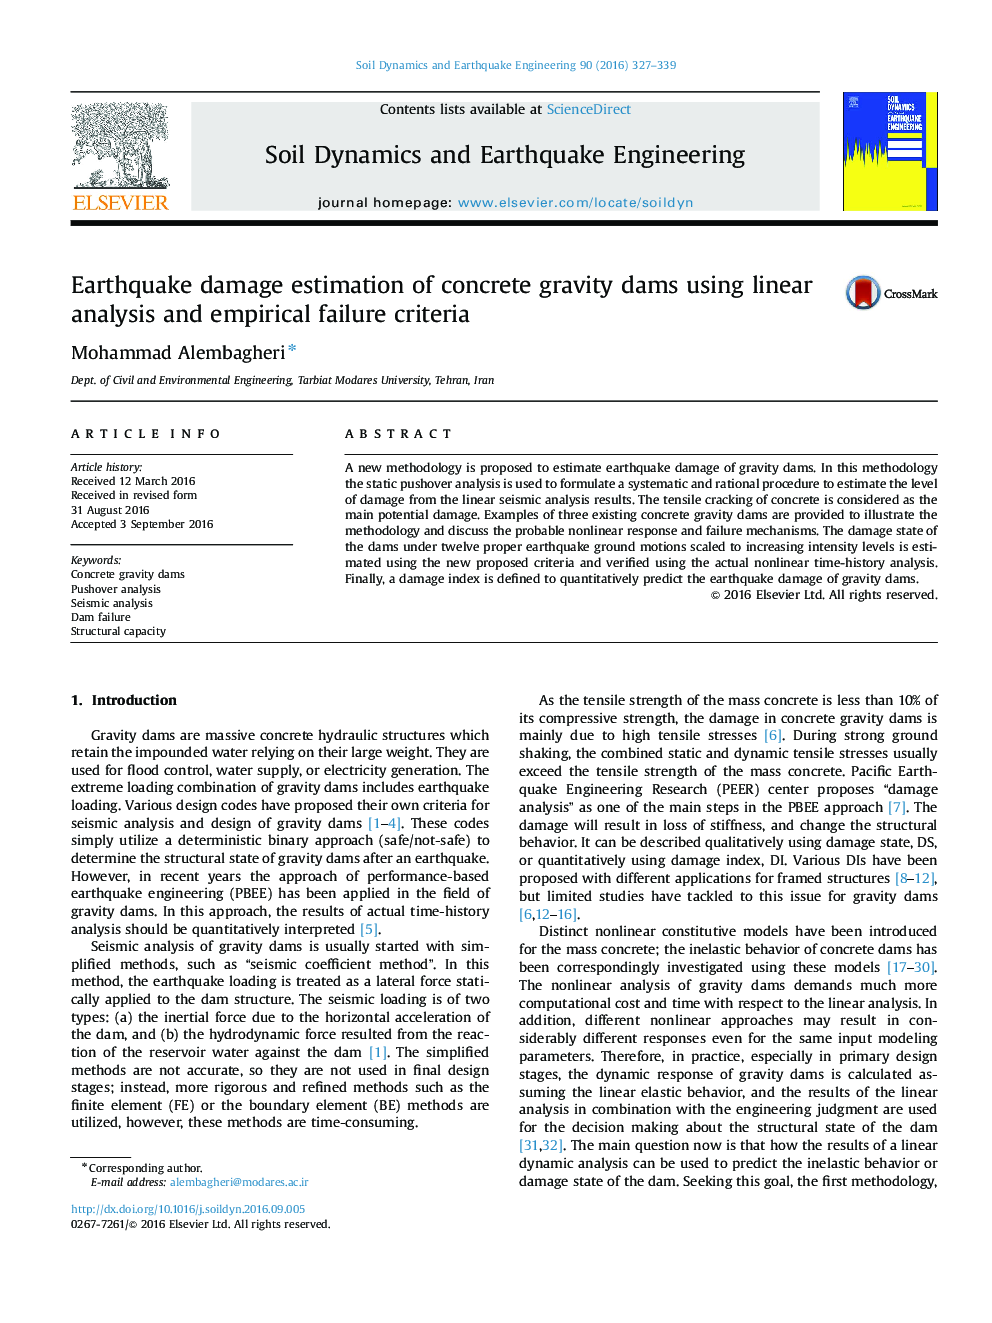 Earthquake damage estimation of concrete gravity dams using linear analysis and empirical failure criteria